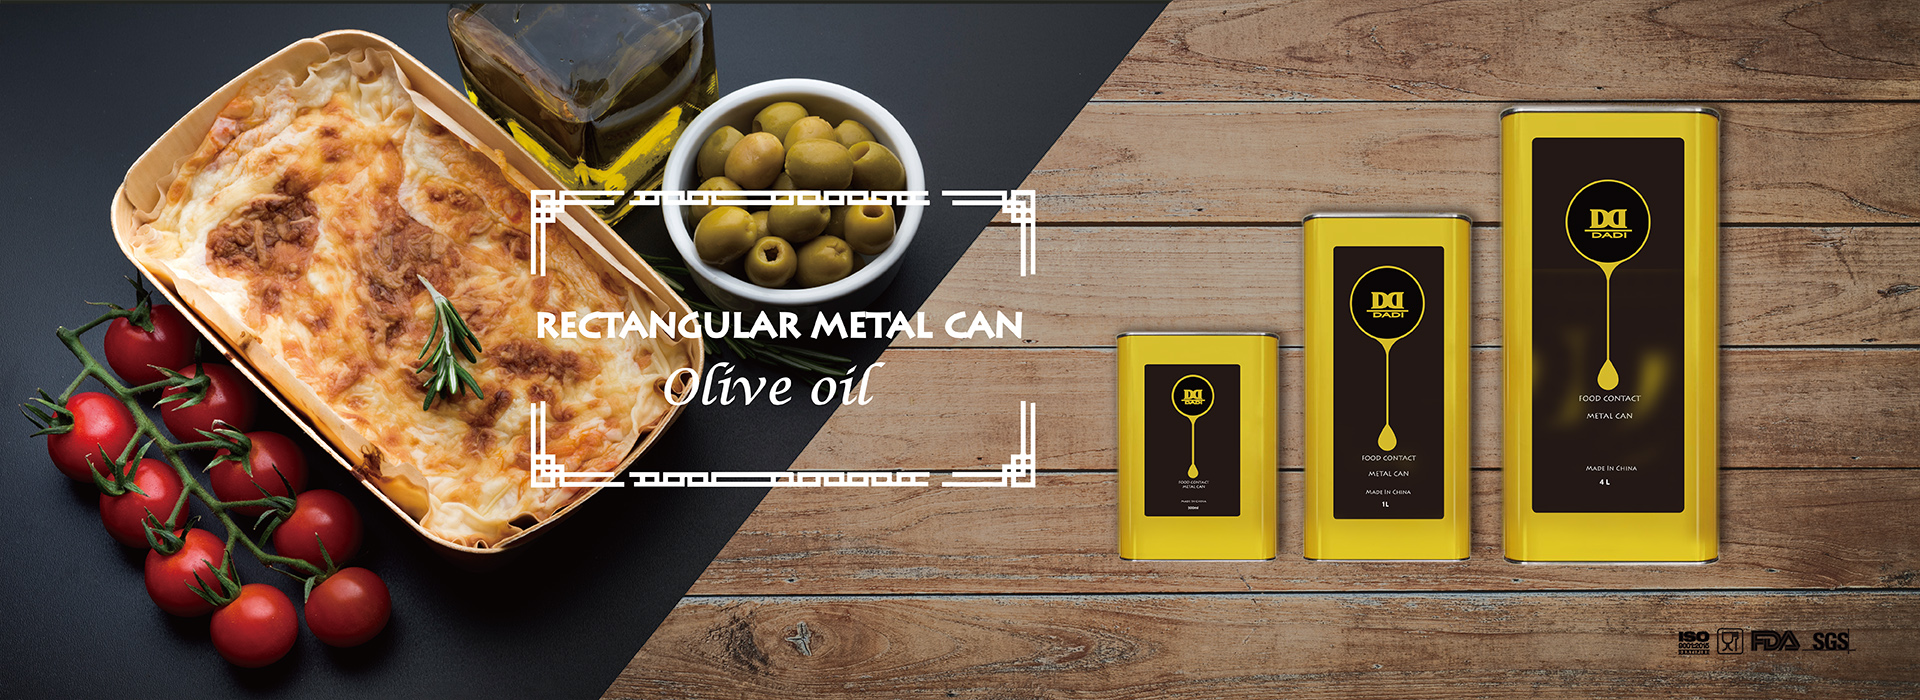 olive oil rectangular tin can 4l